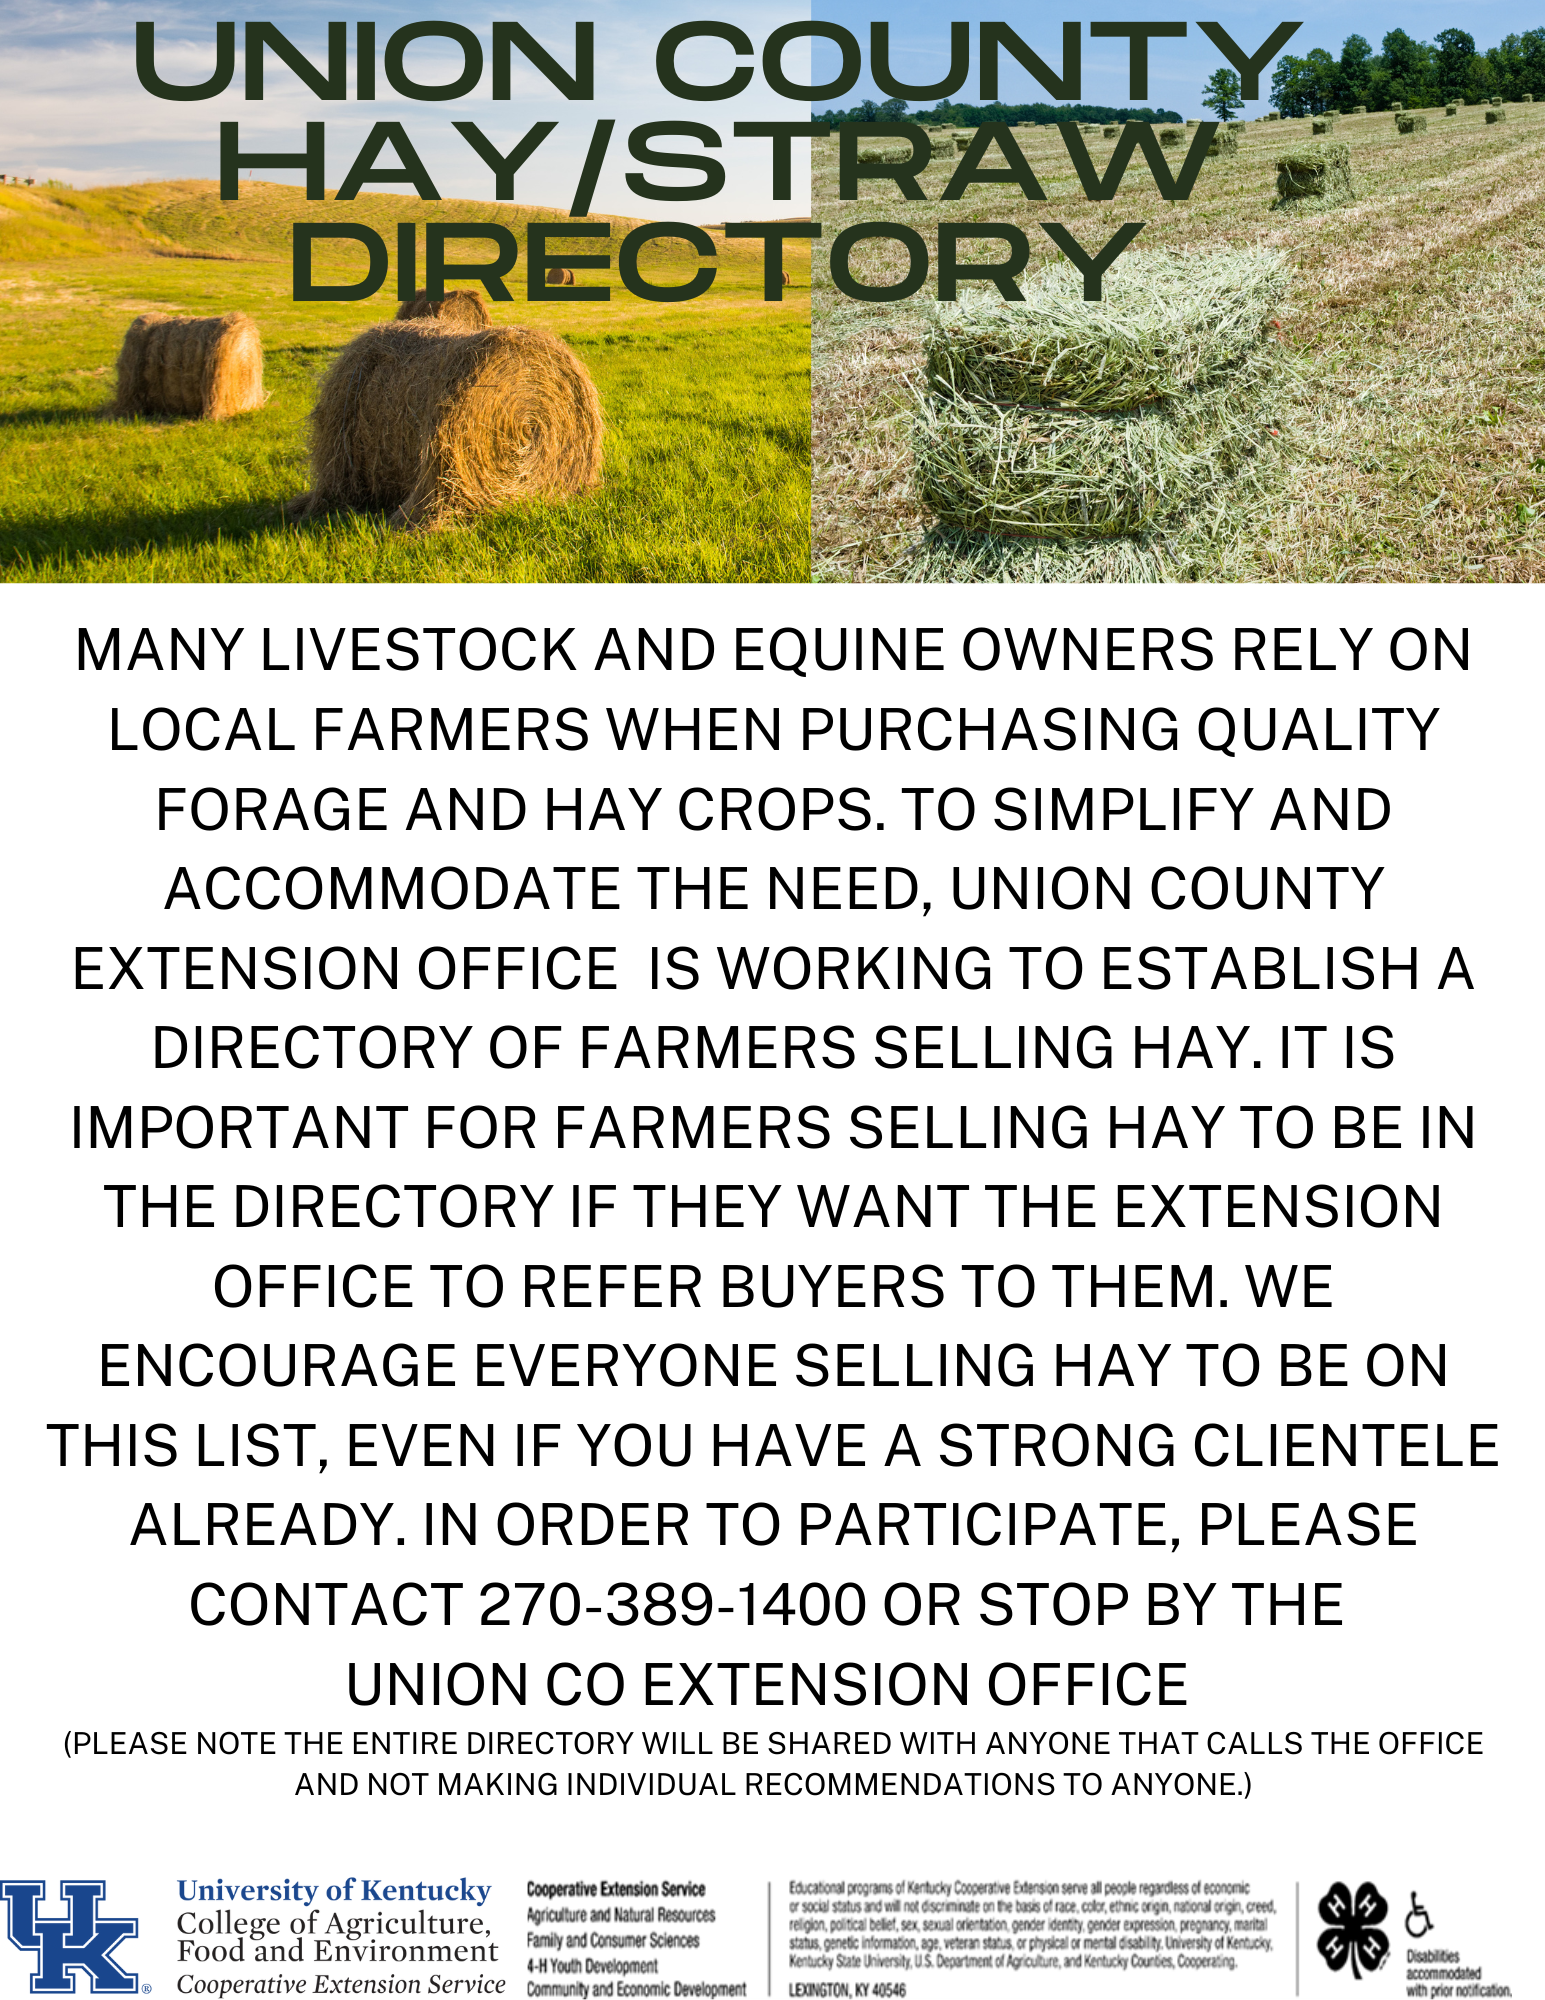 haw straw directory, information, hay bails in field